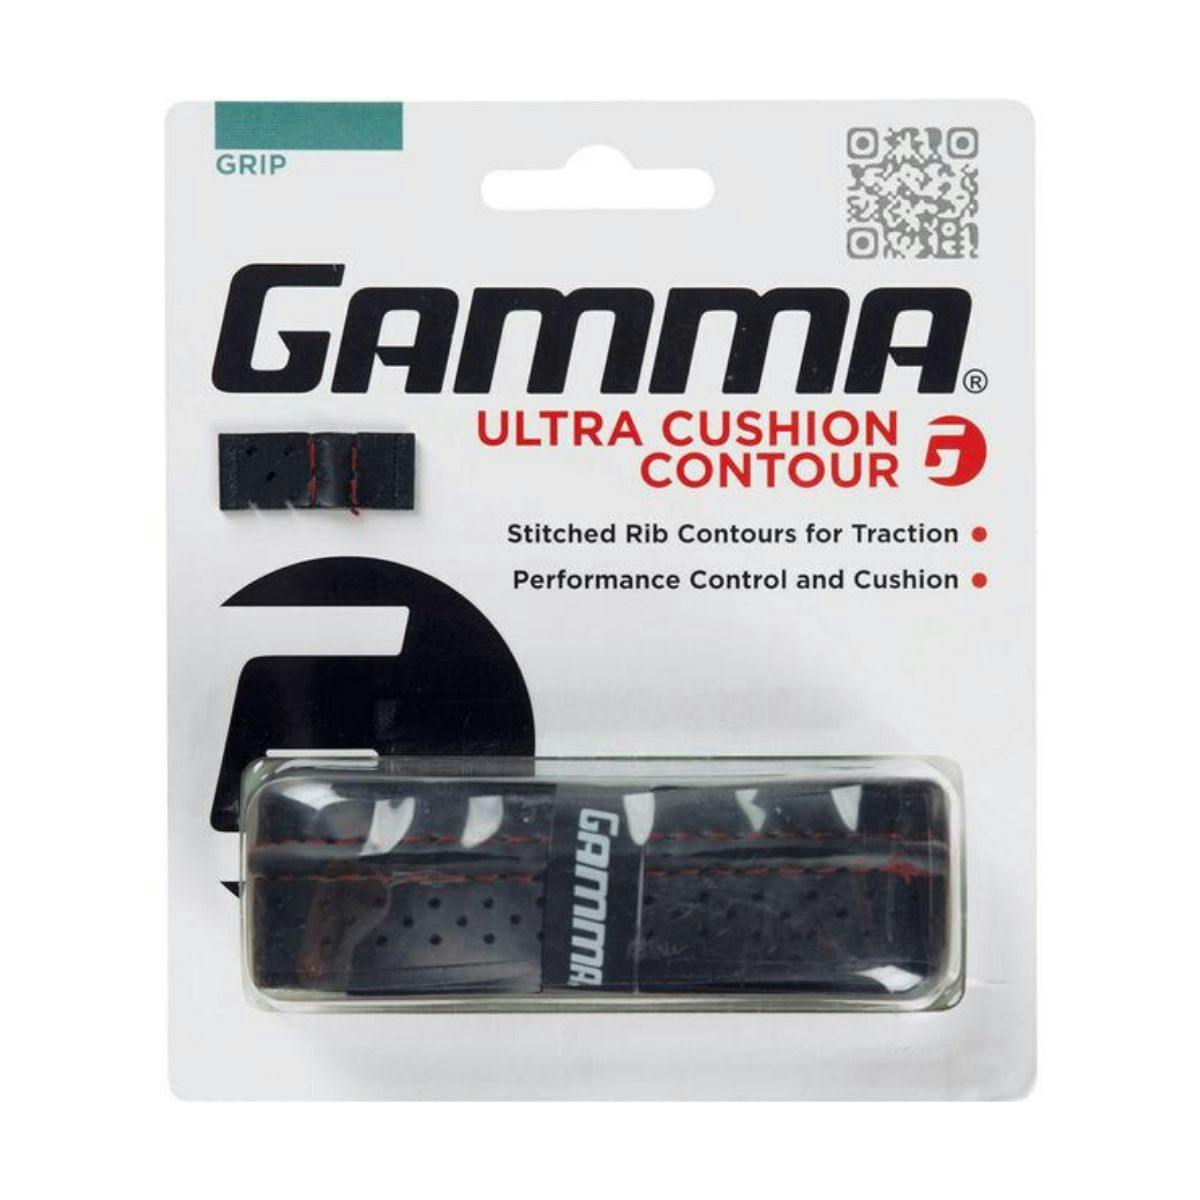 Gamma Ultra Cushion Contour Replacement Grip (1x) (Black)